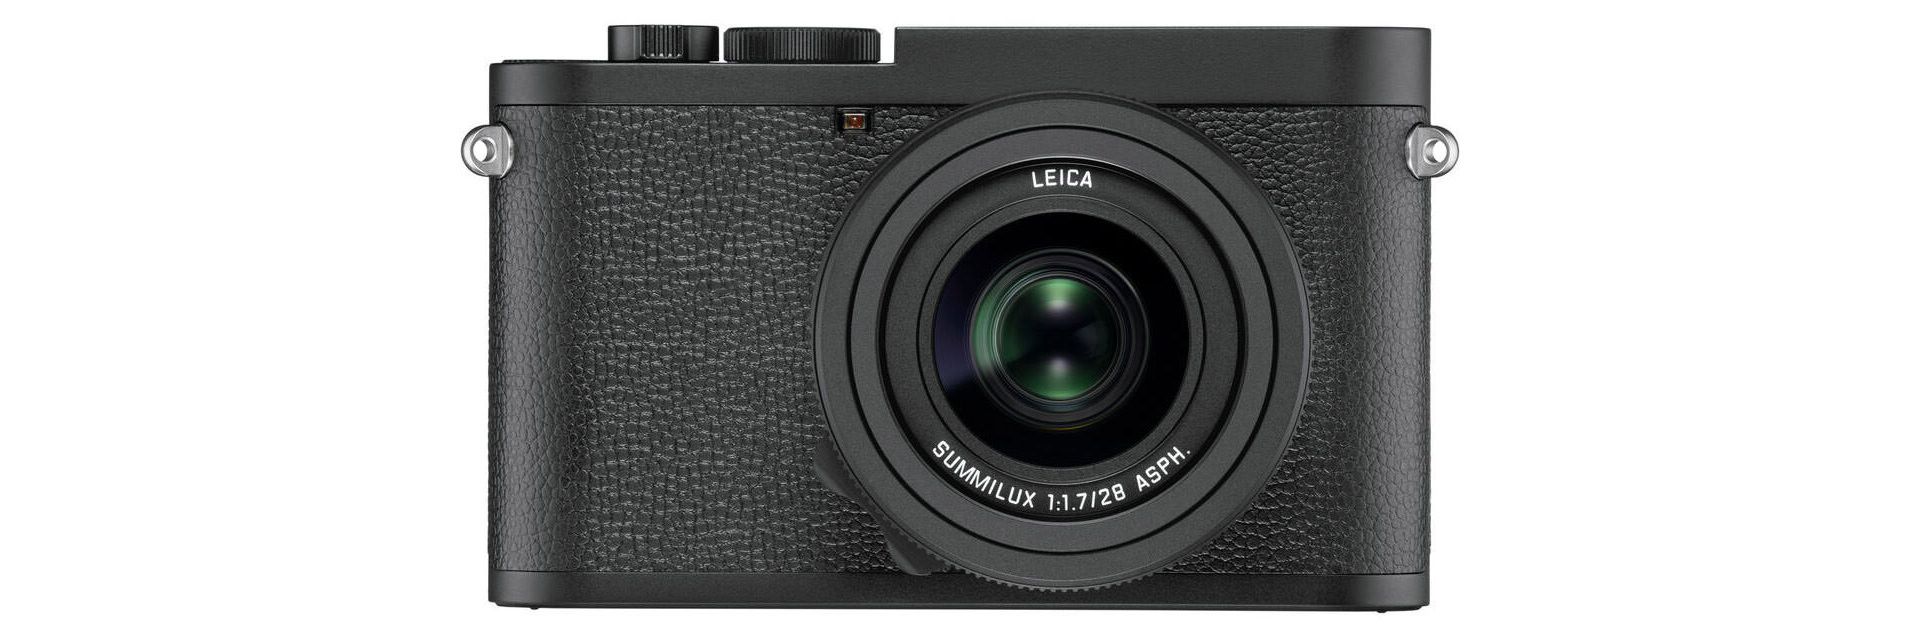 مرجع متخصصين ايران پنل جلويي لايكا كيو 2 مونوكروم / Leica Q2 Monochrom